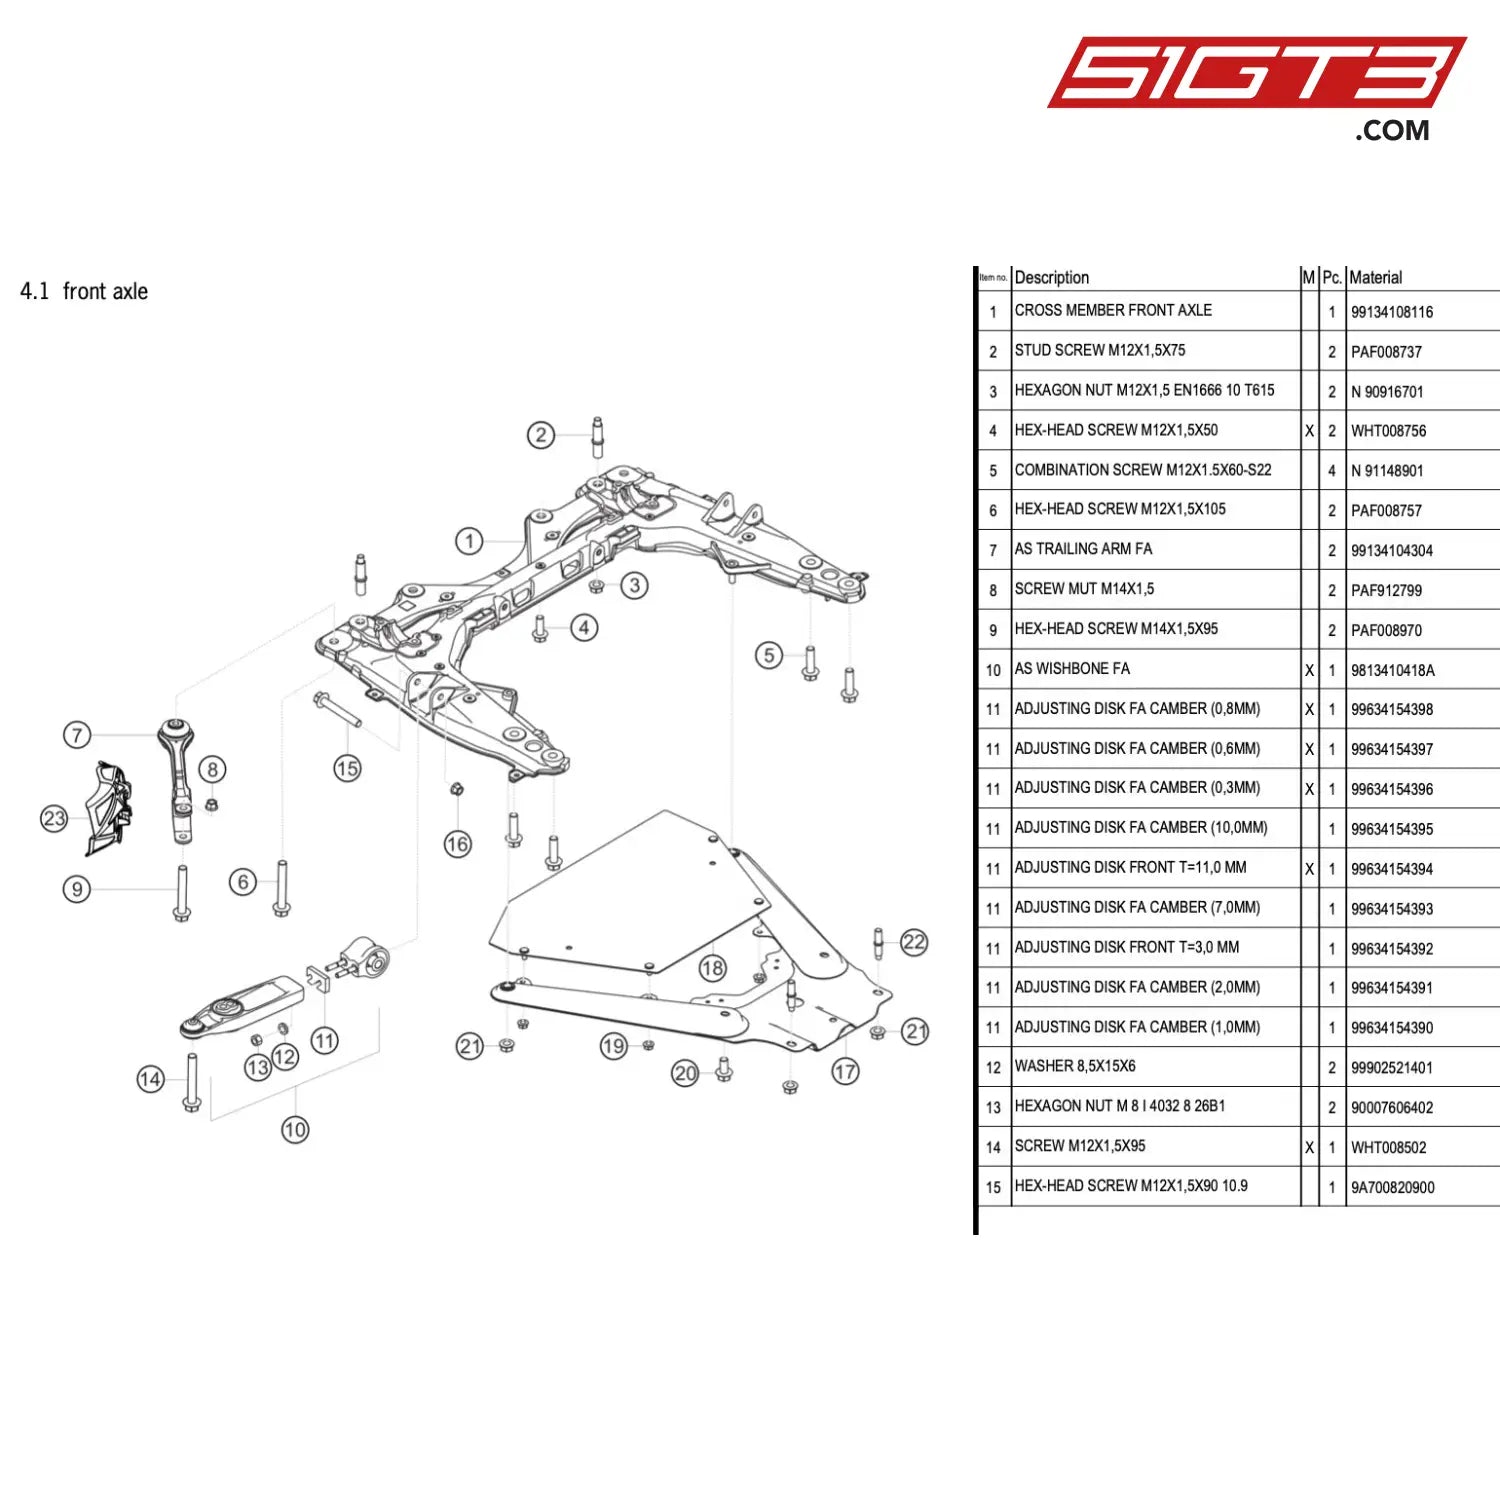 Combination Screw M12X1.5X60-S22 - N 91148901 [Porsche 718 Cayman Gt4 Rs Clubsport] Front Axle